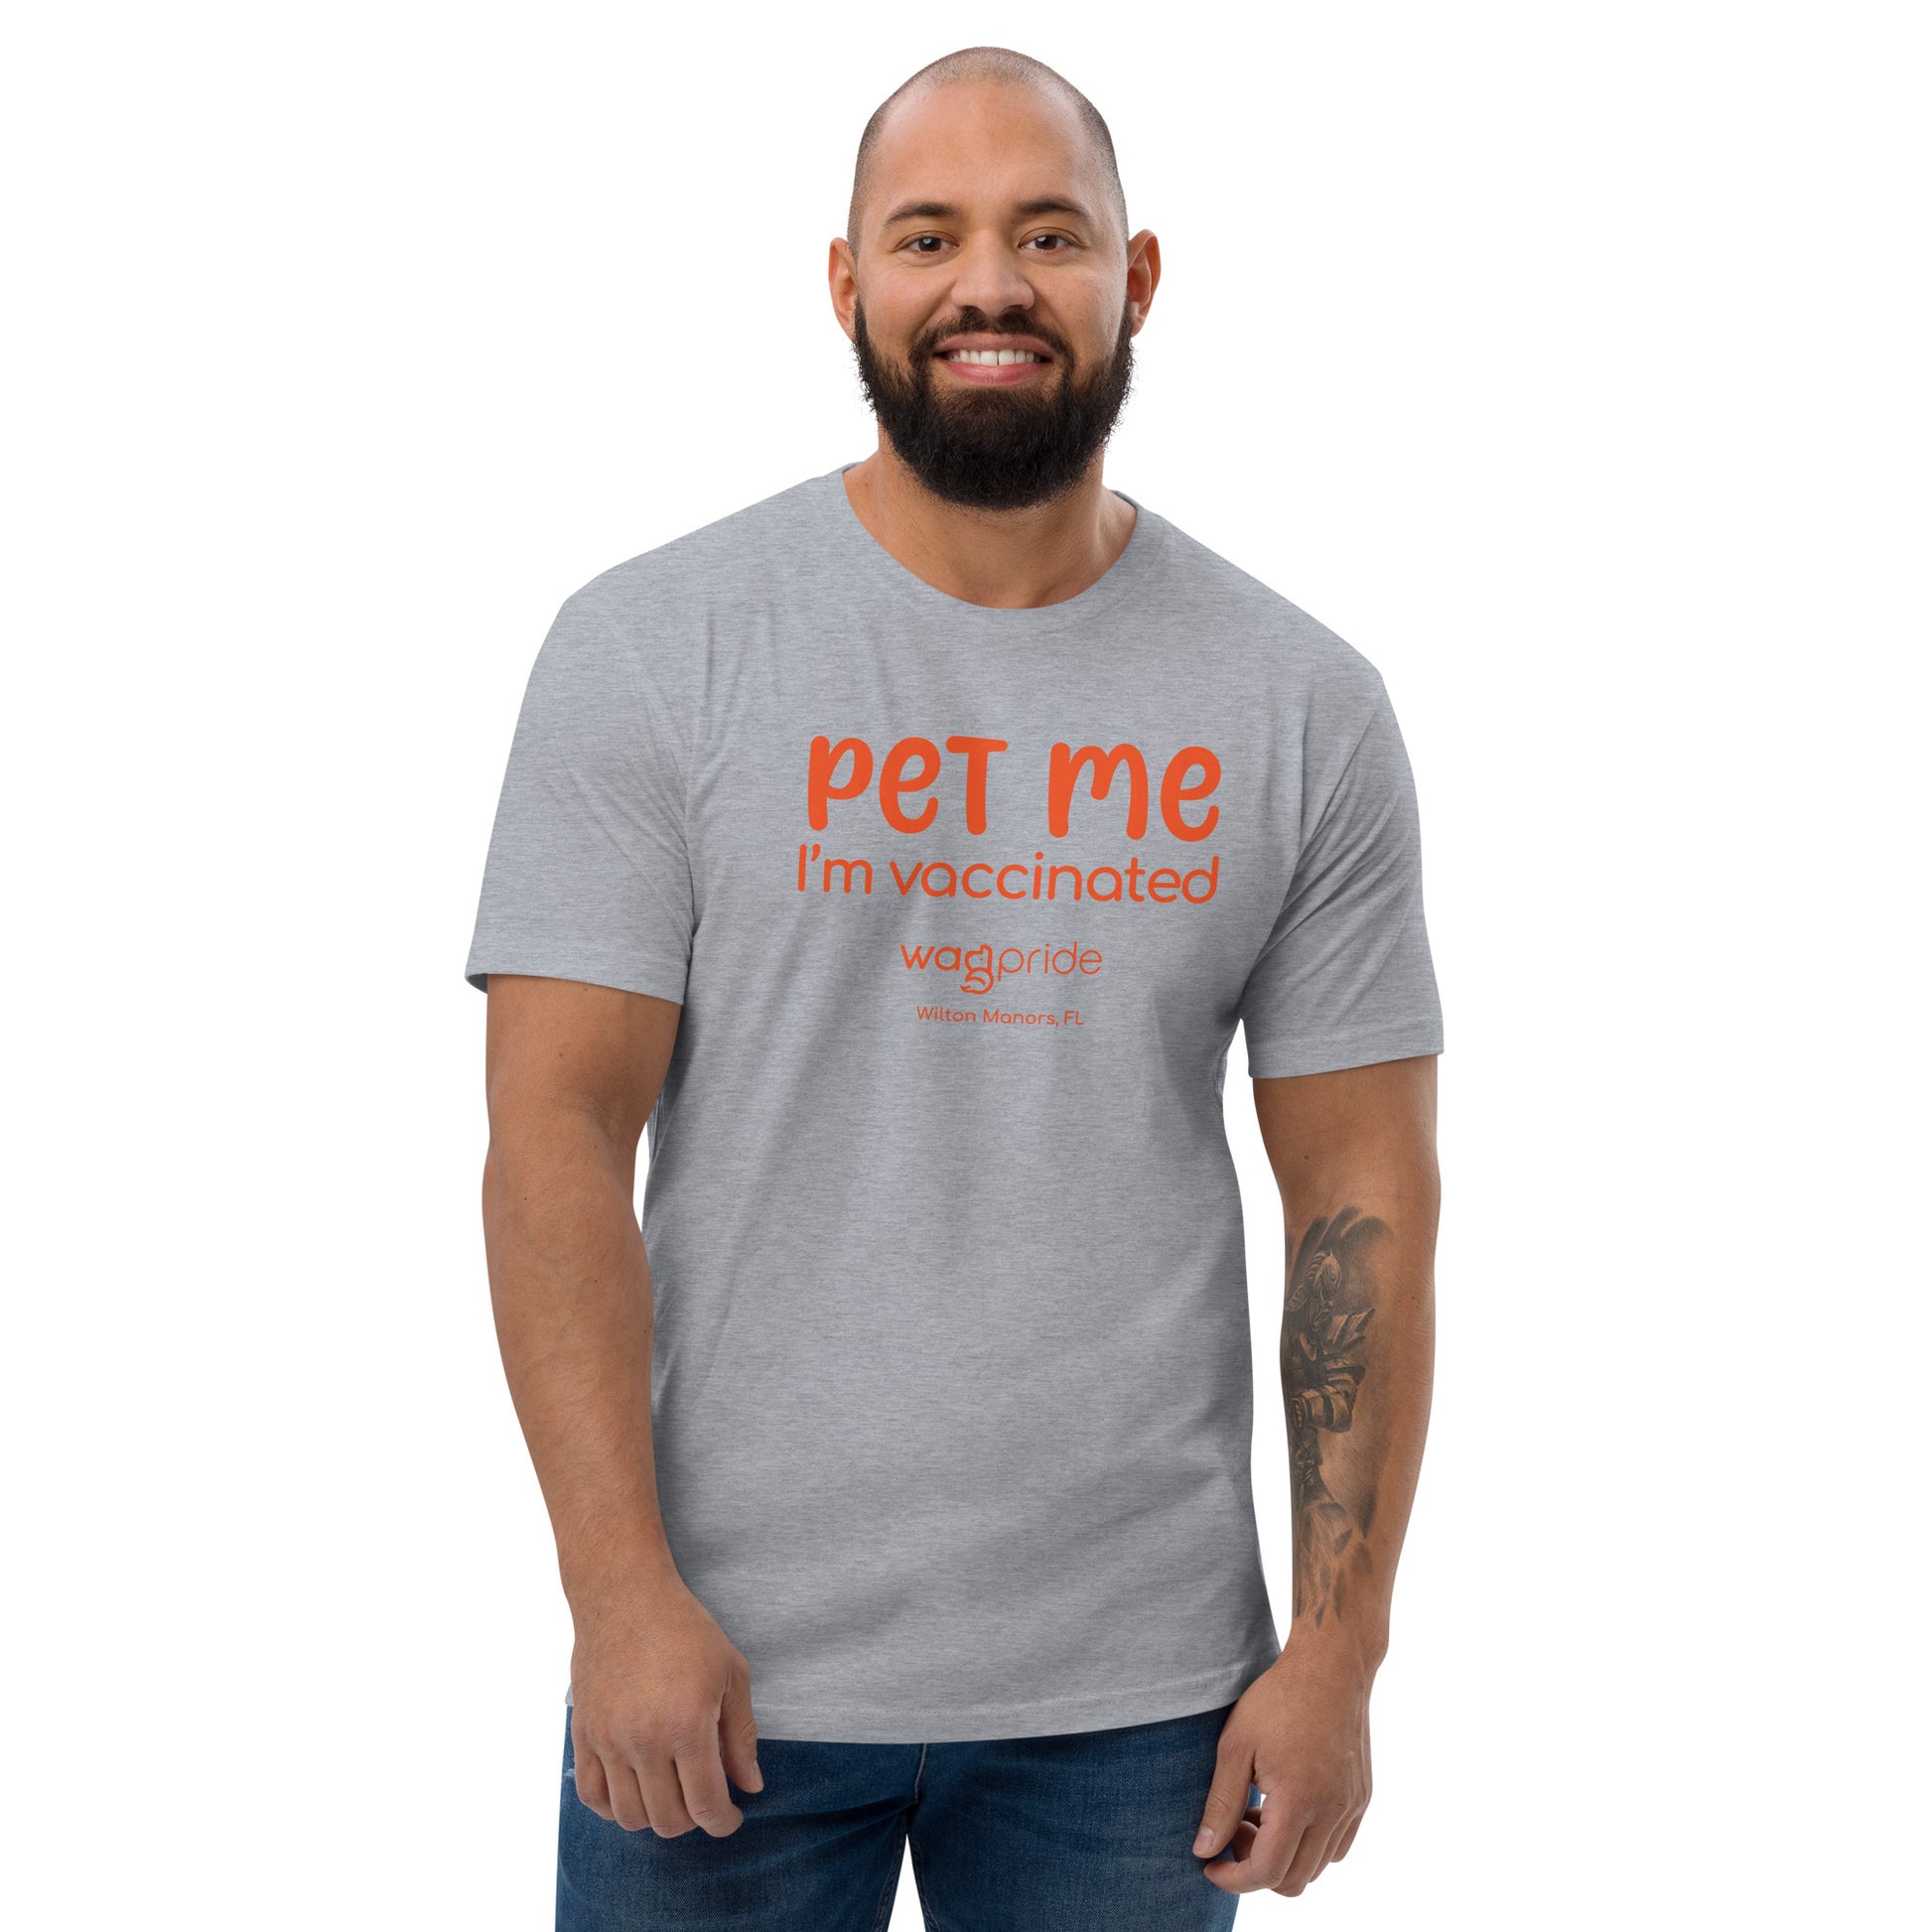 Wagpride Pet Me Short Sleeve T-shirt Size XS